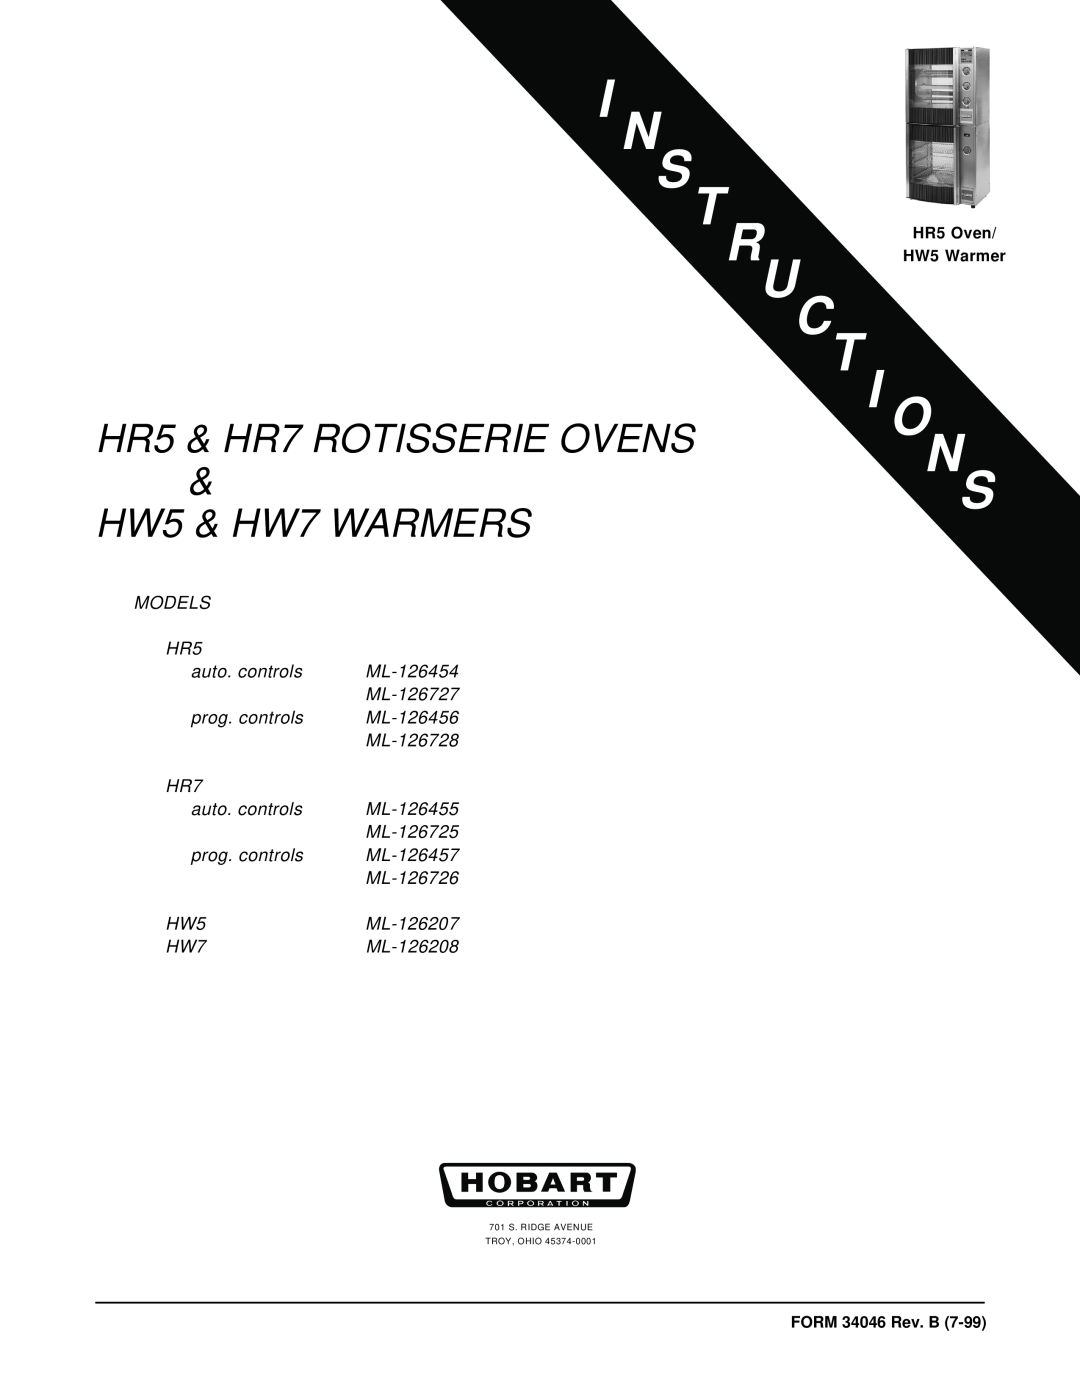 Hobart manual T I O, HR5 & HR7 ROTISSERIE OVENS, HW5 & HW7 WARMERS 